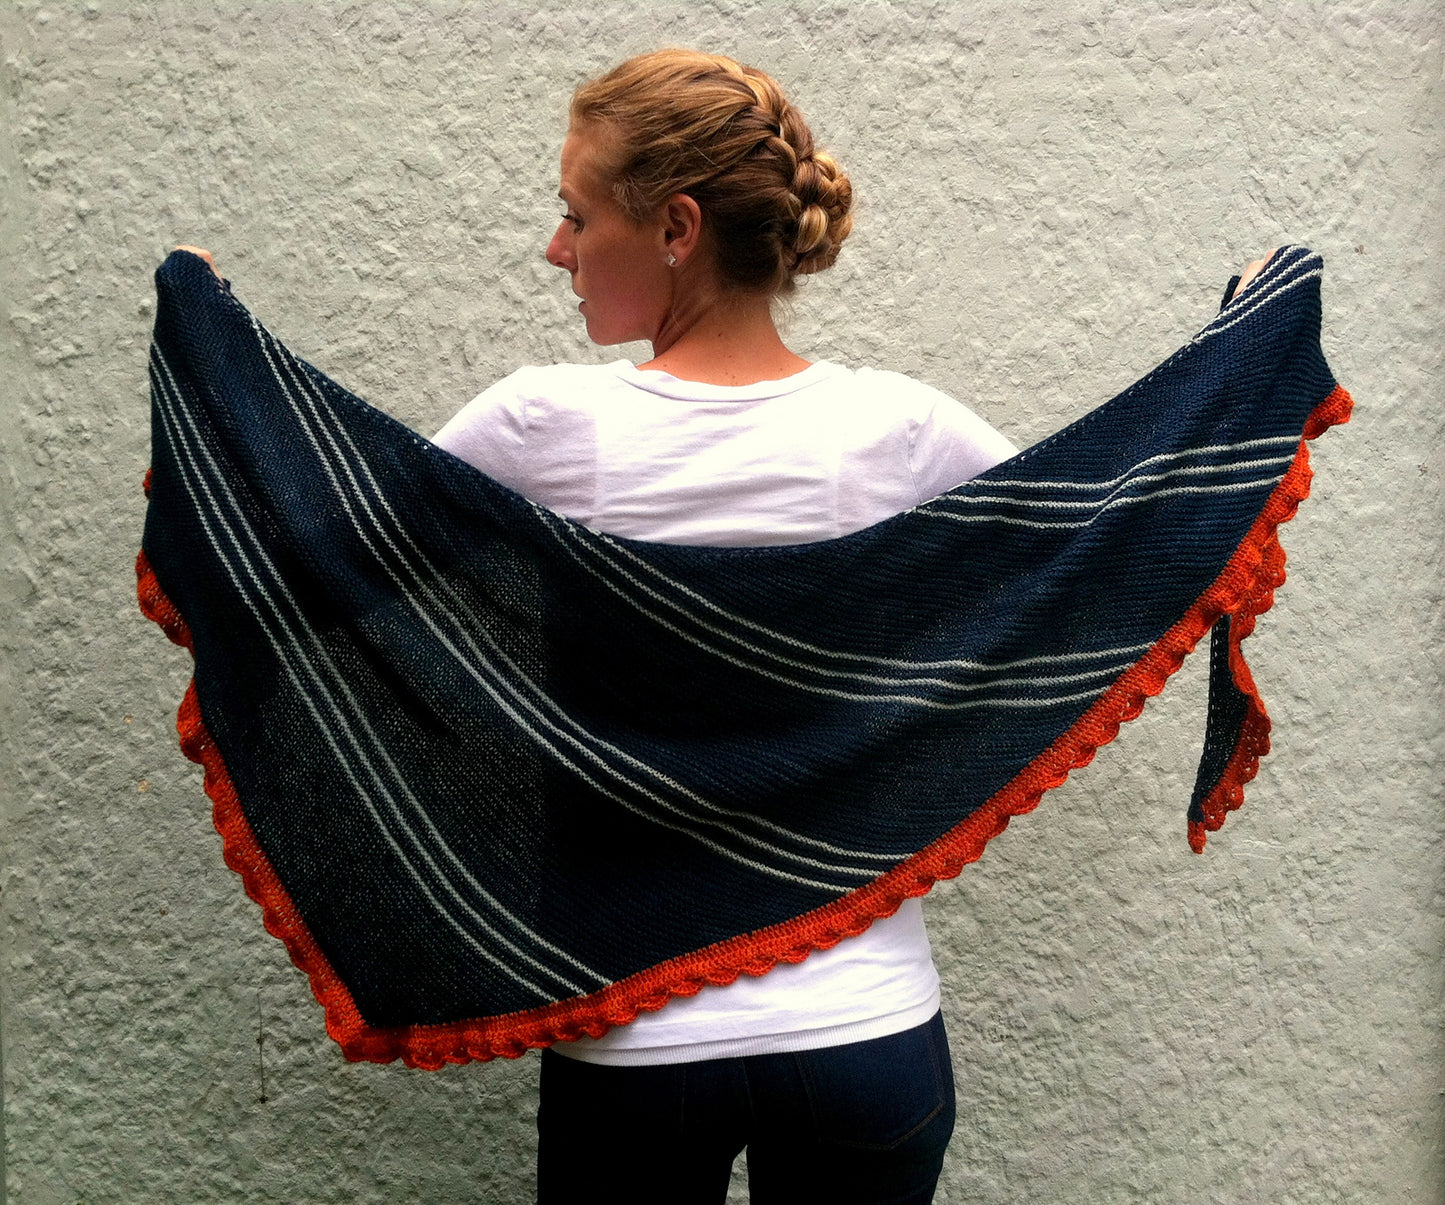 Bermuda shawl knitting pattern by Amy Miller